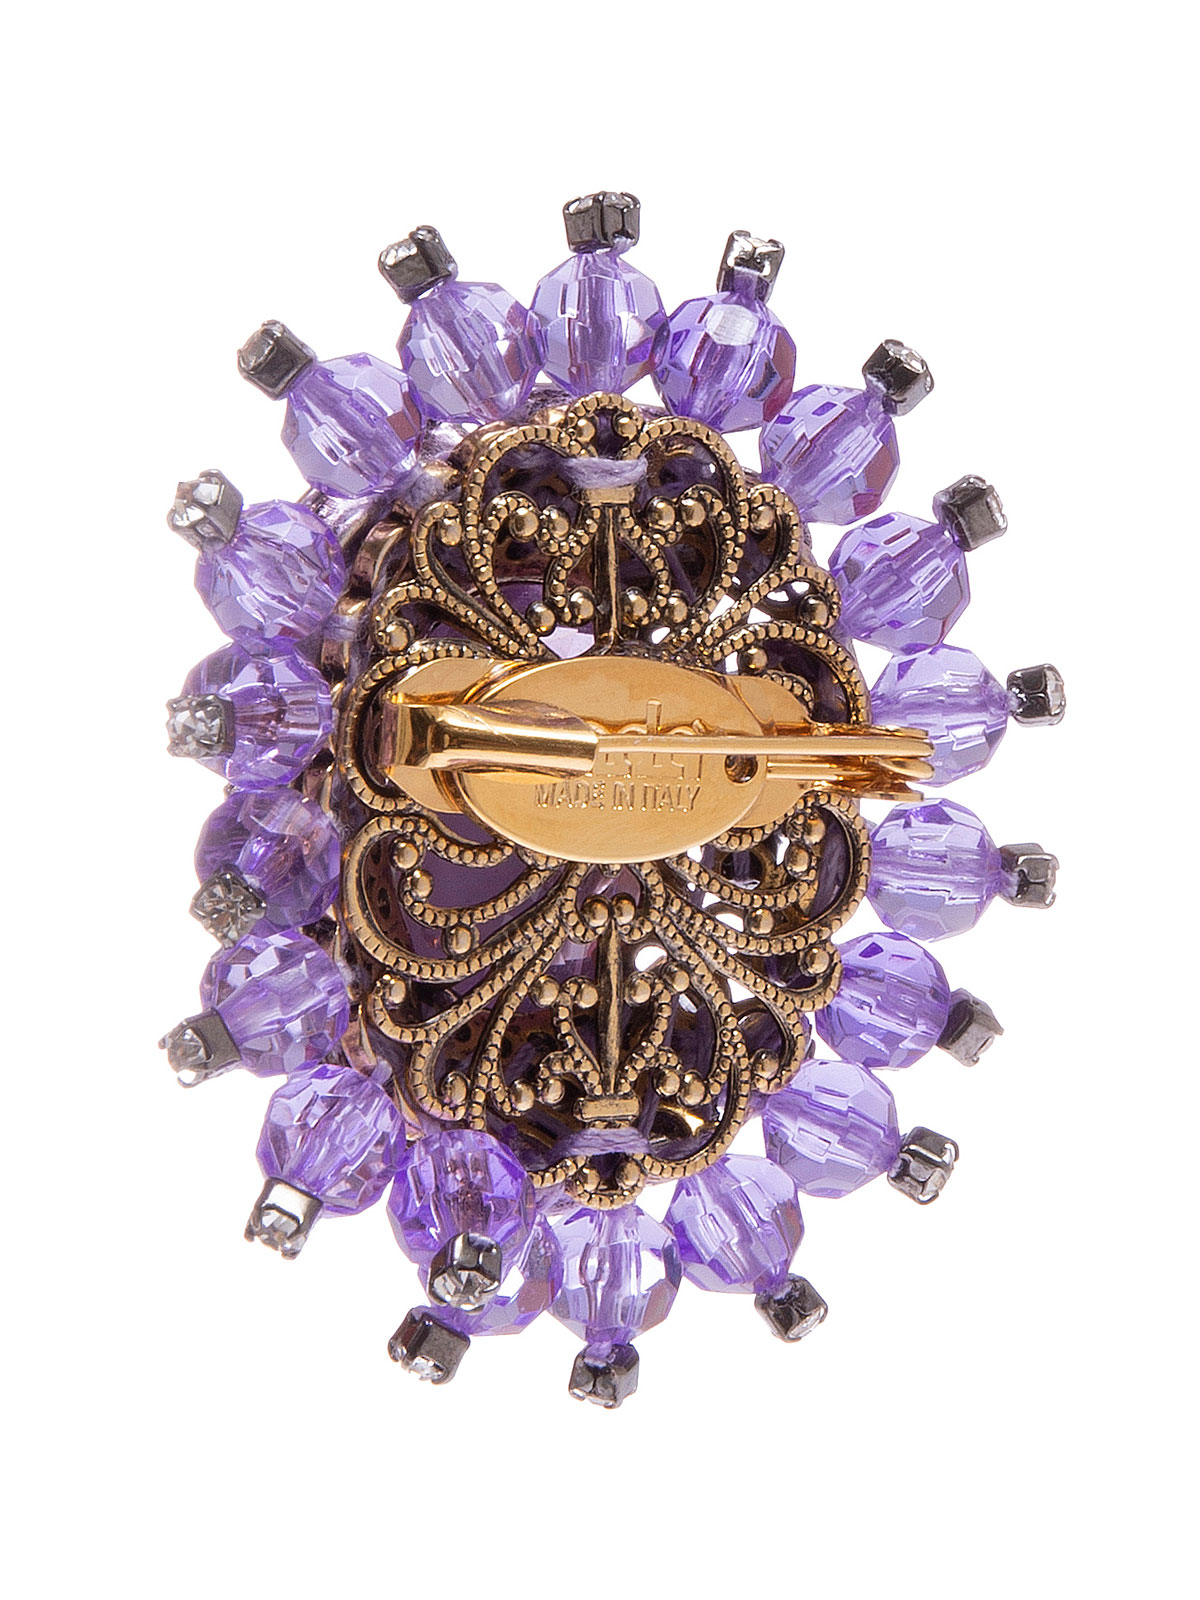 Oval brooch with plexiglass beads